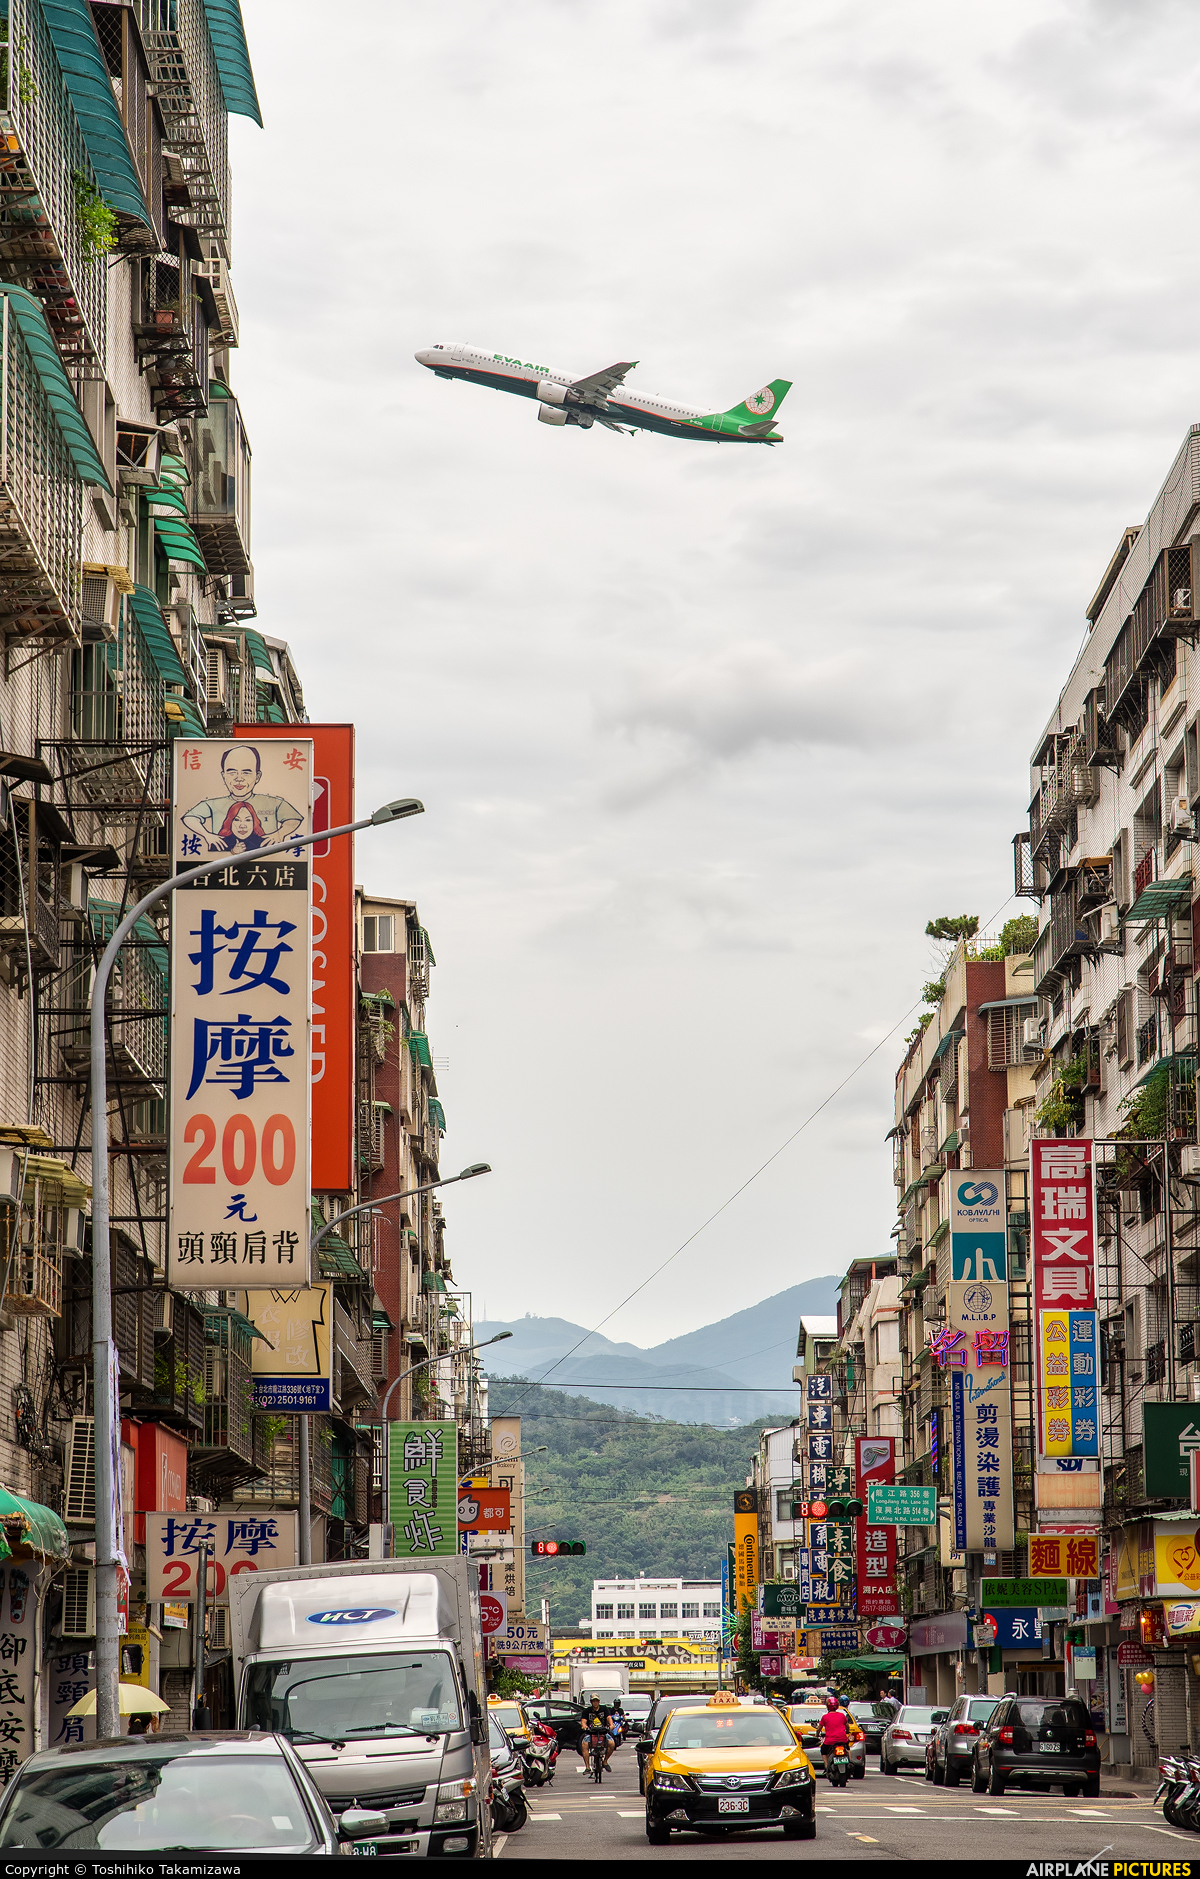 Eva Air B-16201 aircraft at Taipei Sung Shan/Songshan Airport